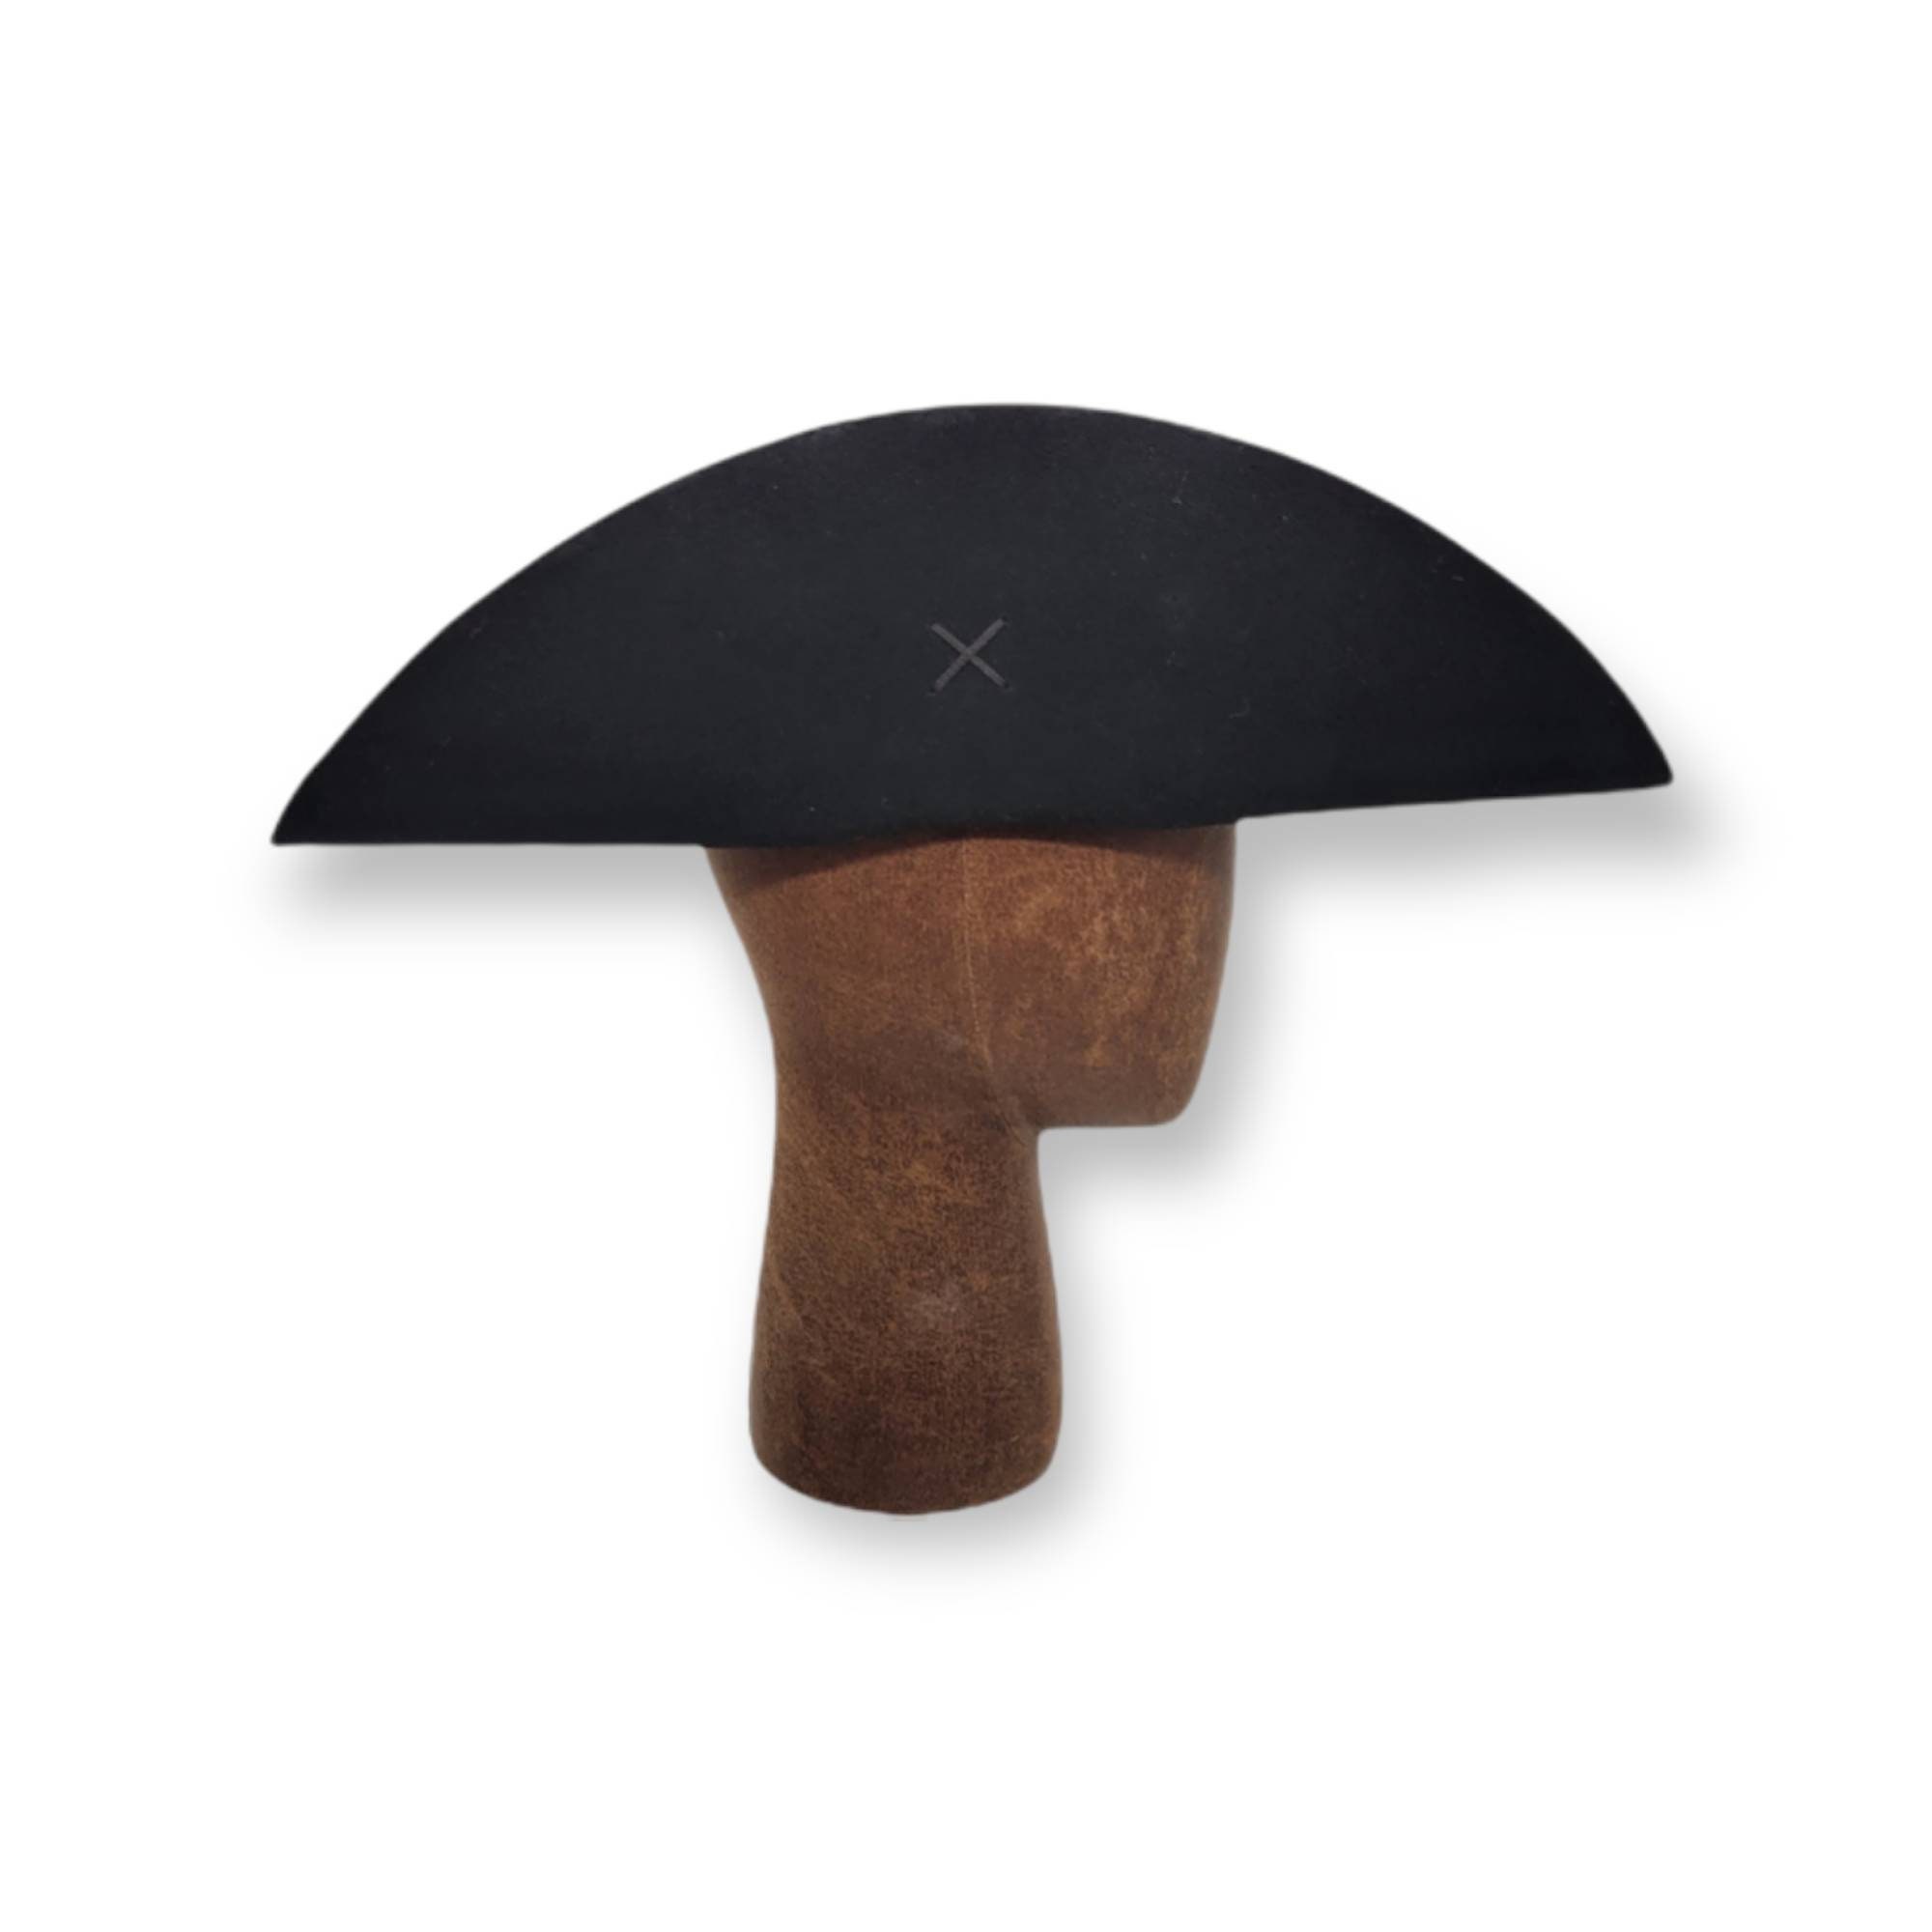 DIY Wool Felt Hat Blank - Black - SCA - Ren Faire - Cavalier - Pirate